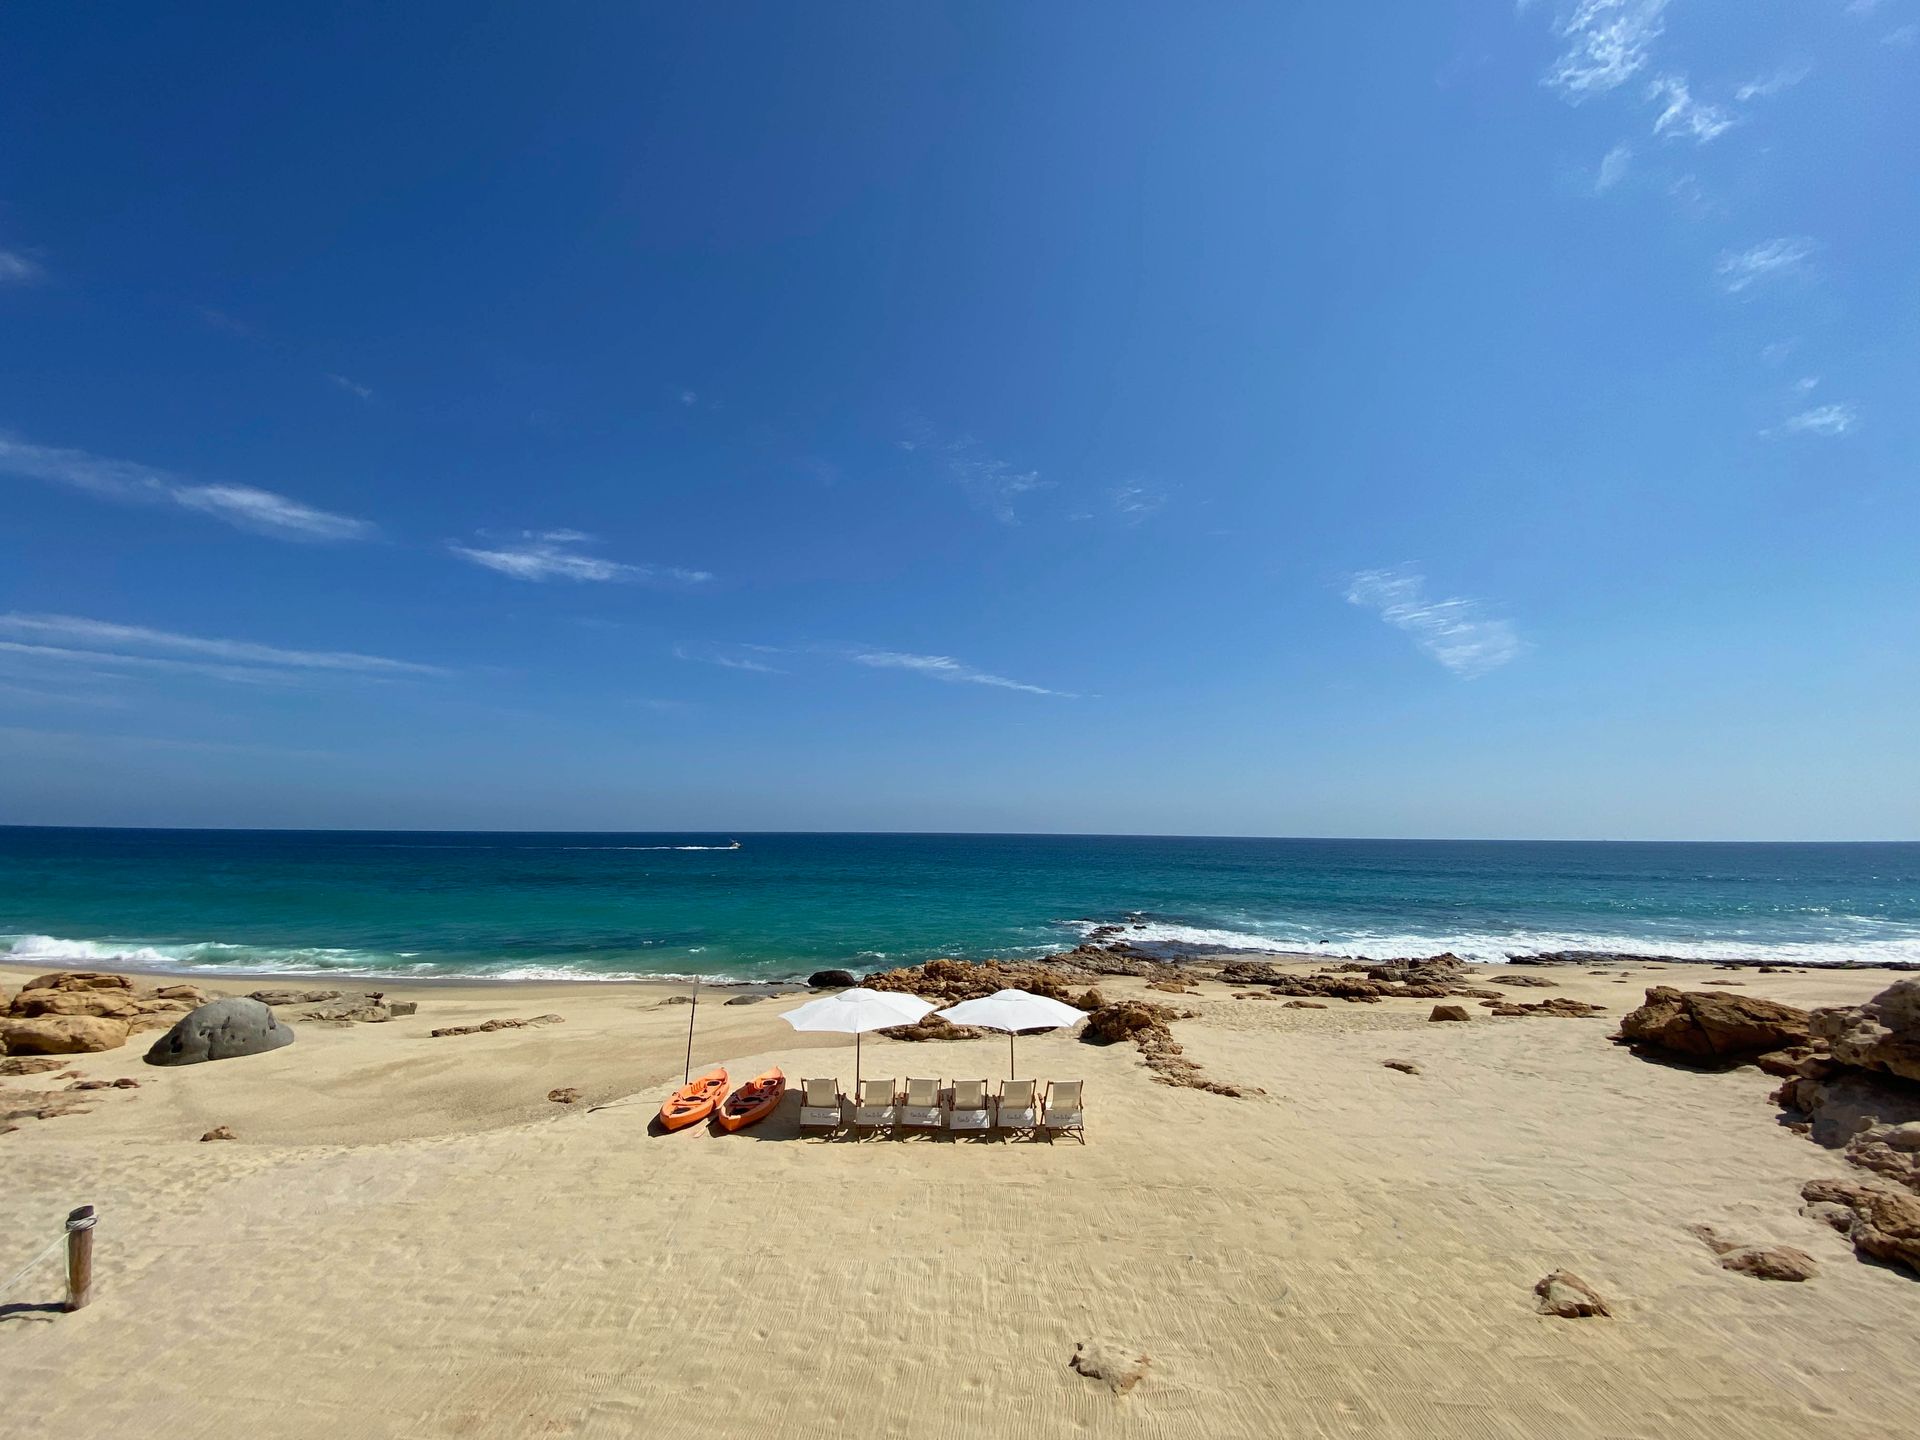 a sandy beach with umbrellas and chairs near the ocean